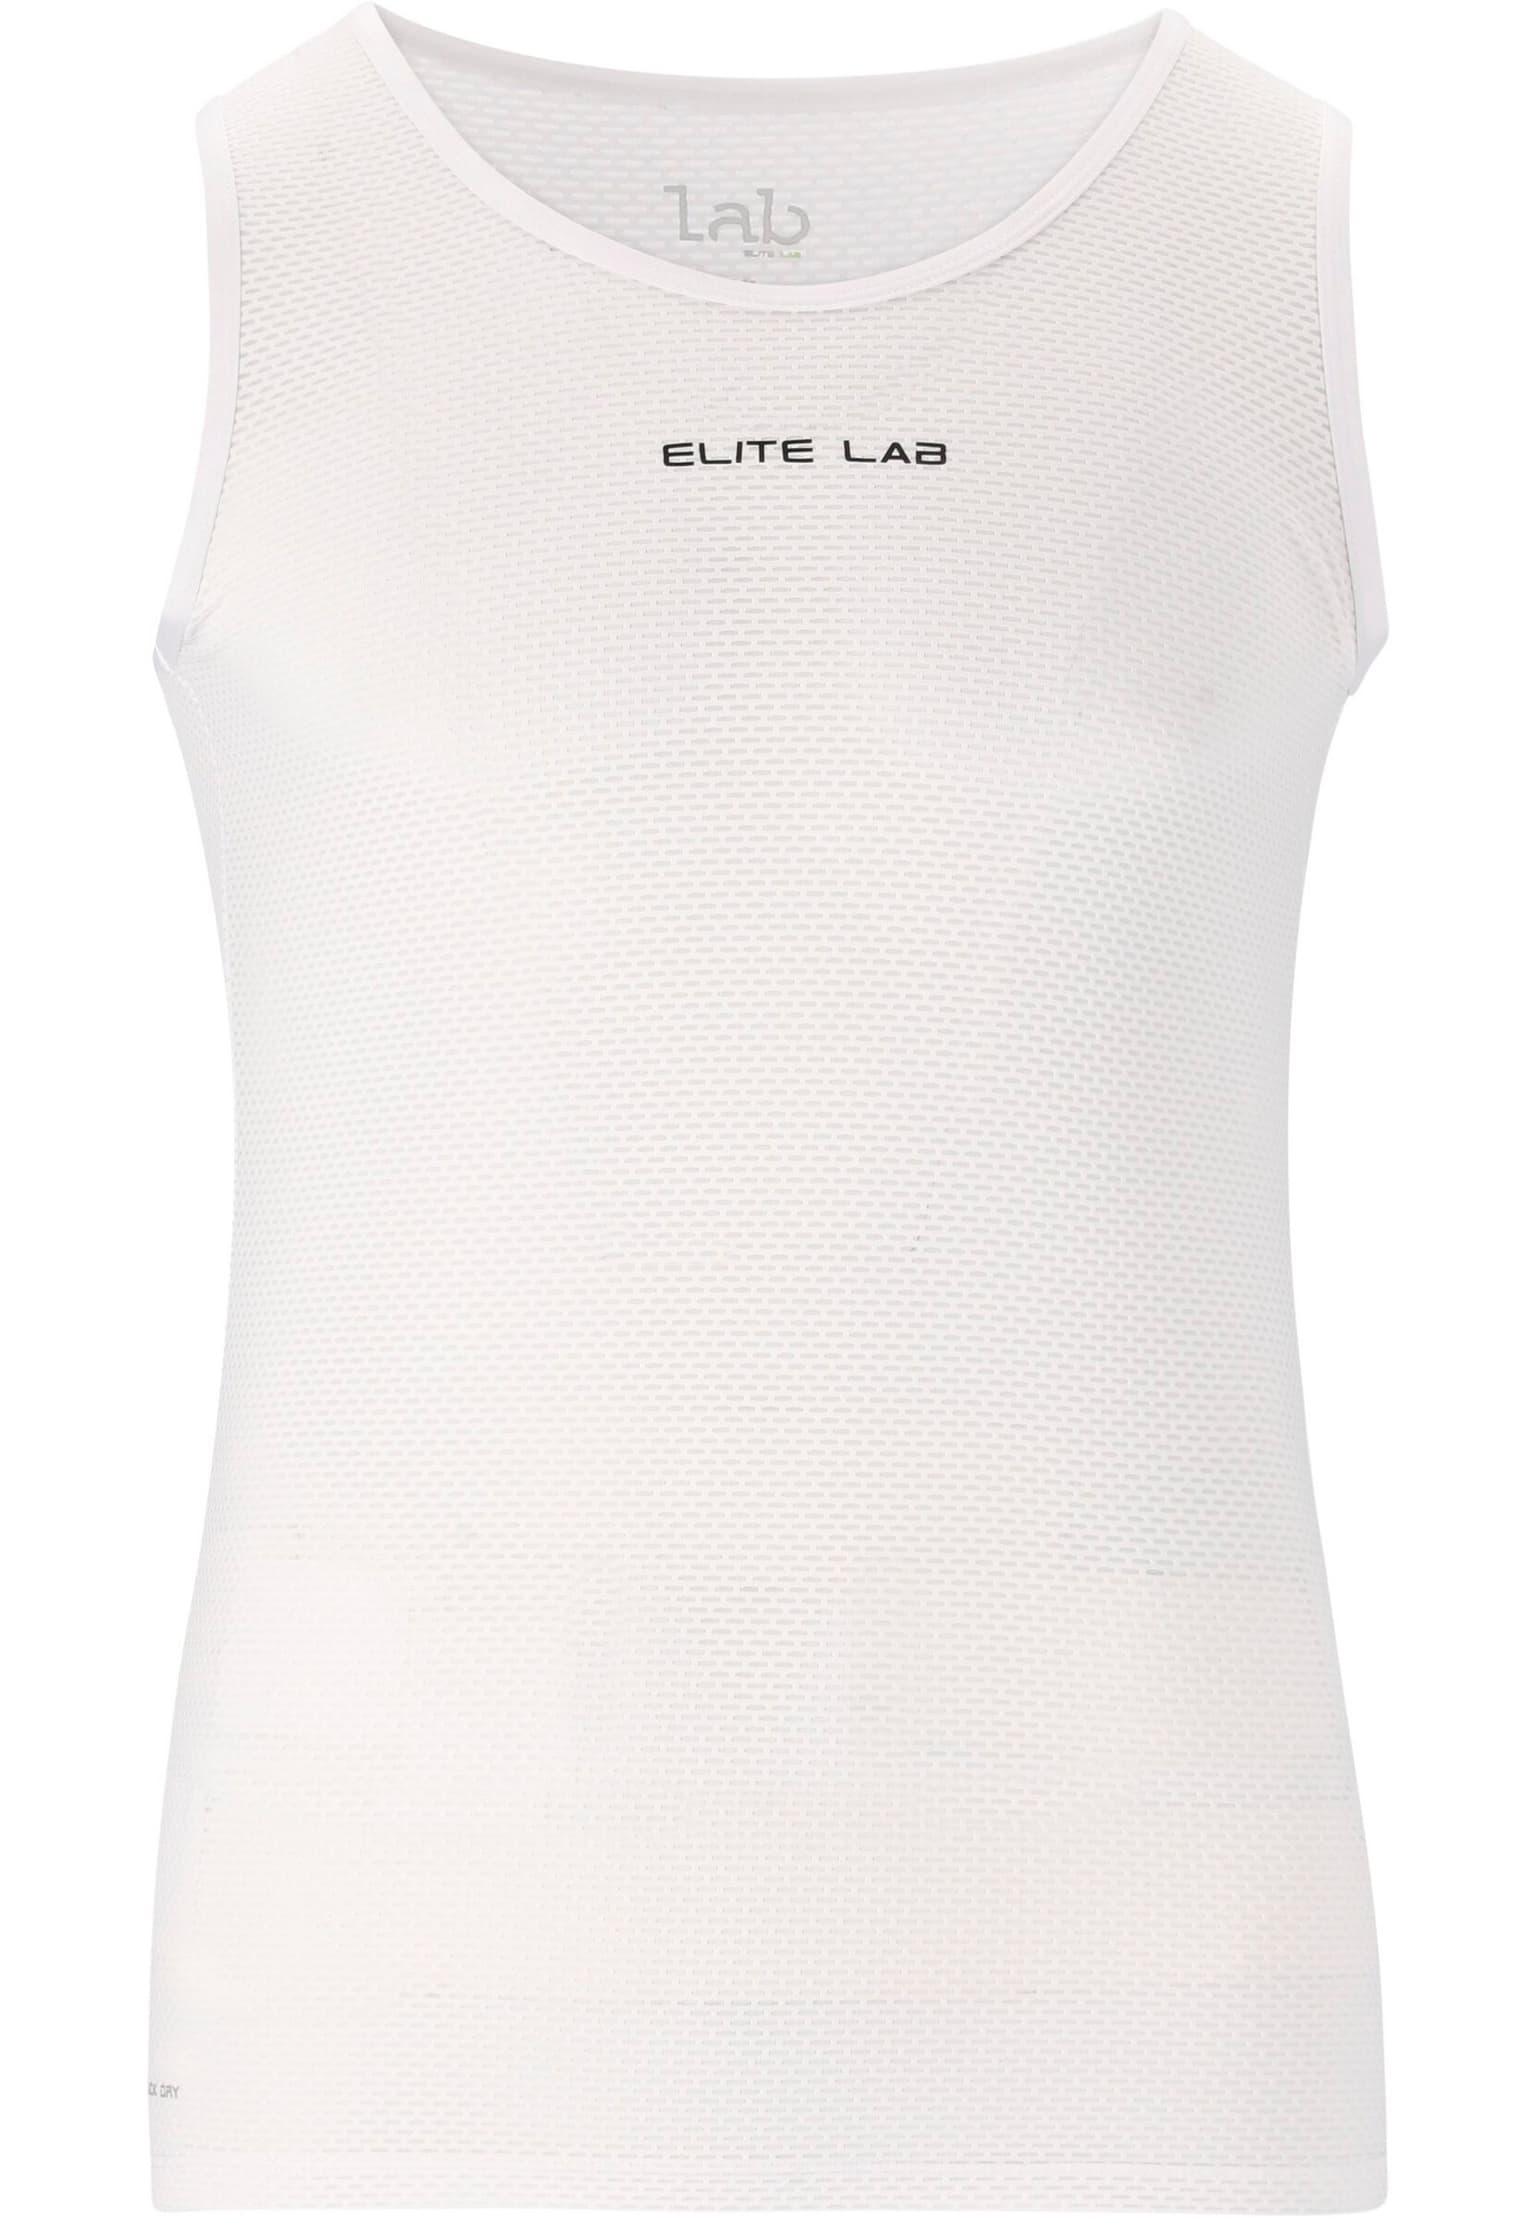 Elite Lab Elite Lab Bike Elite X1 Mesh Tech Sleeveless Baselayer Thermoshirt bianco 1